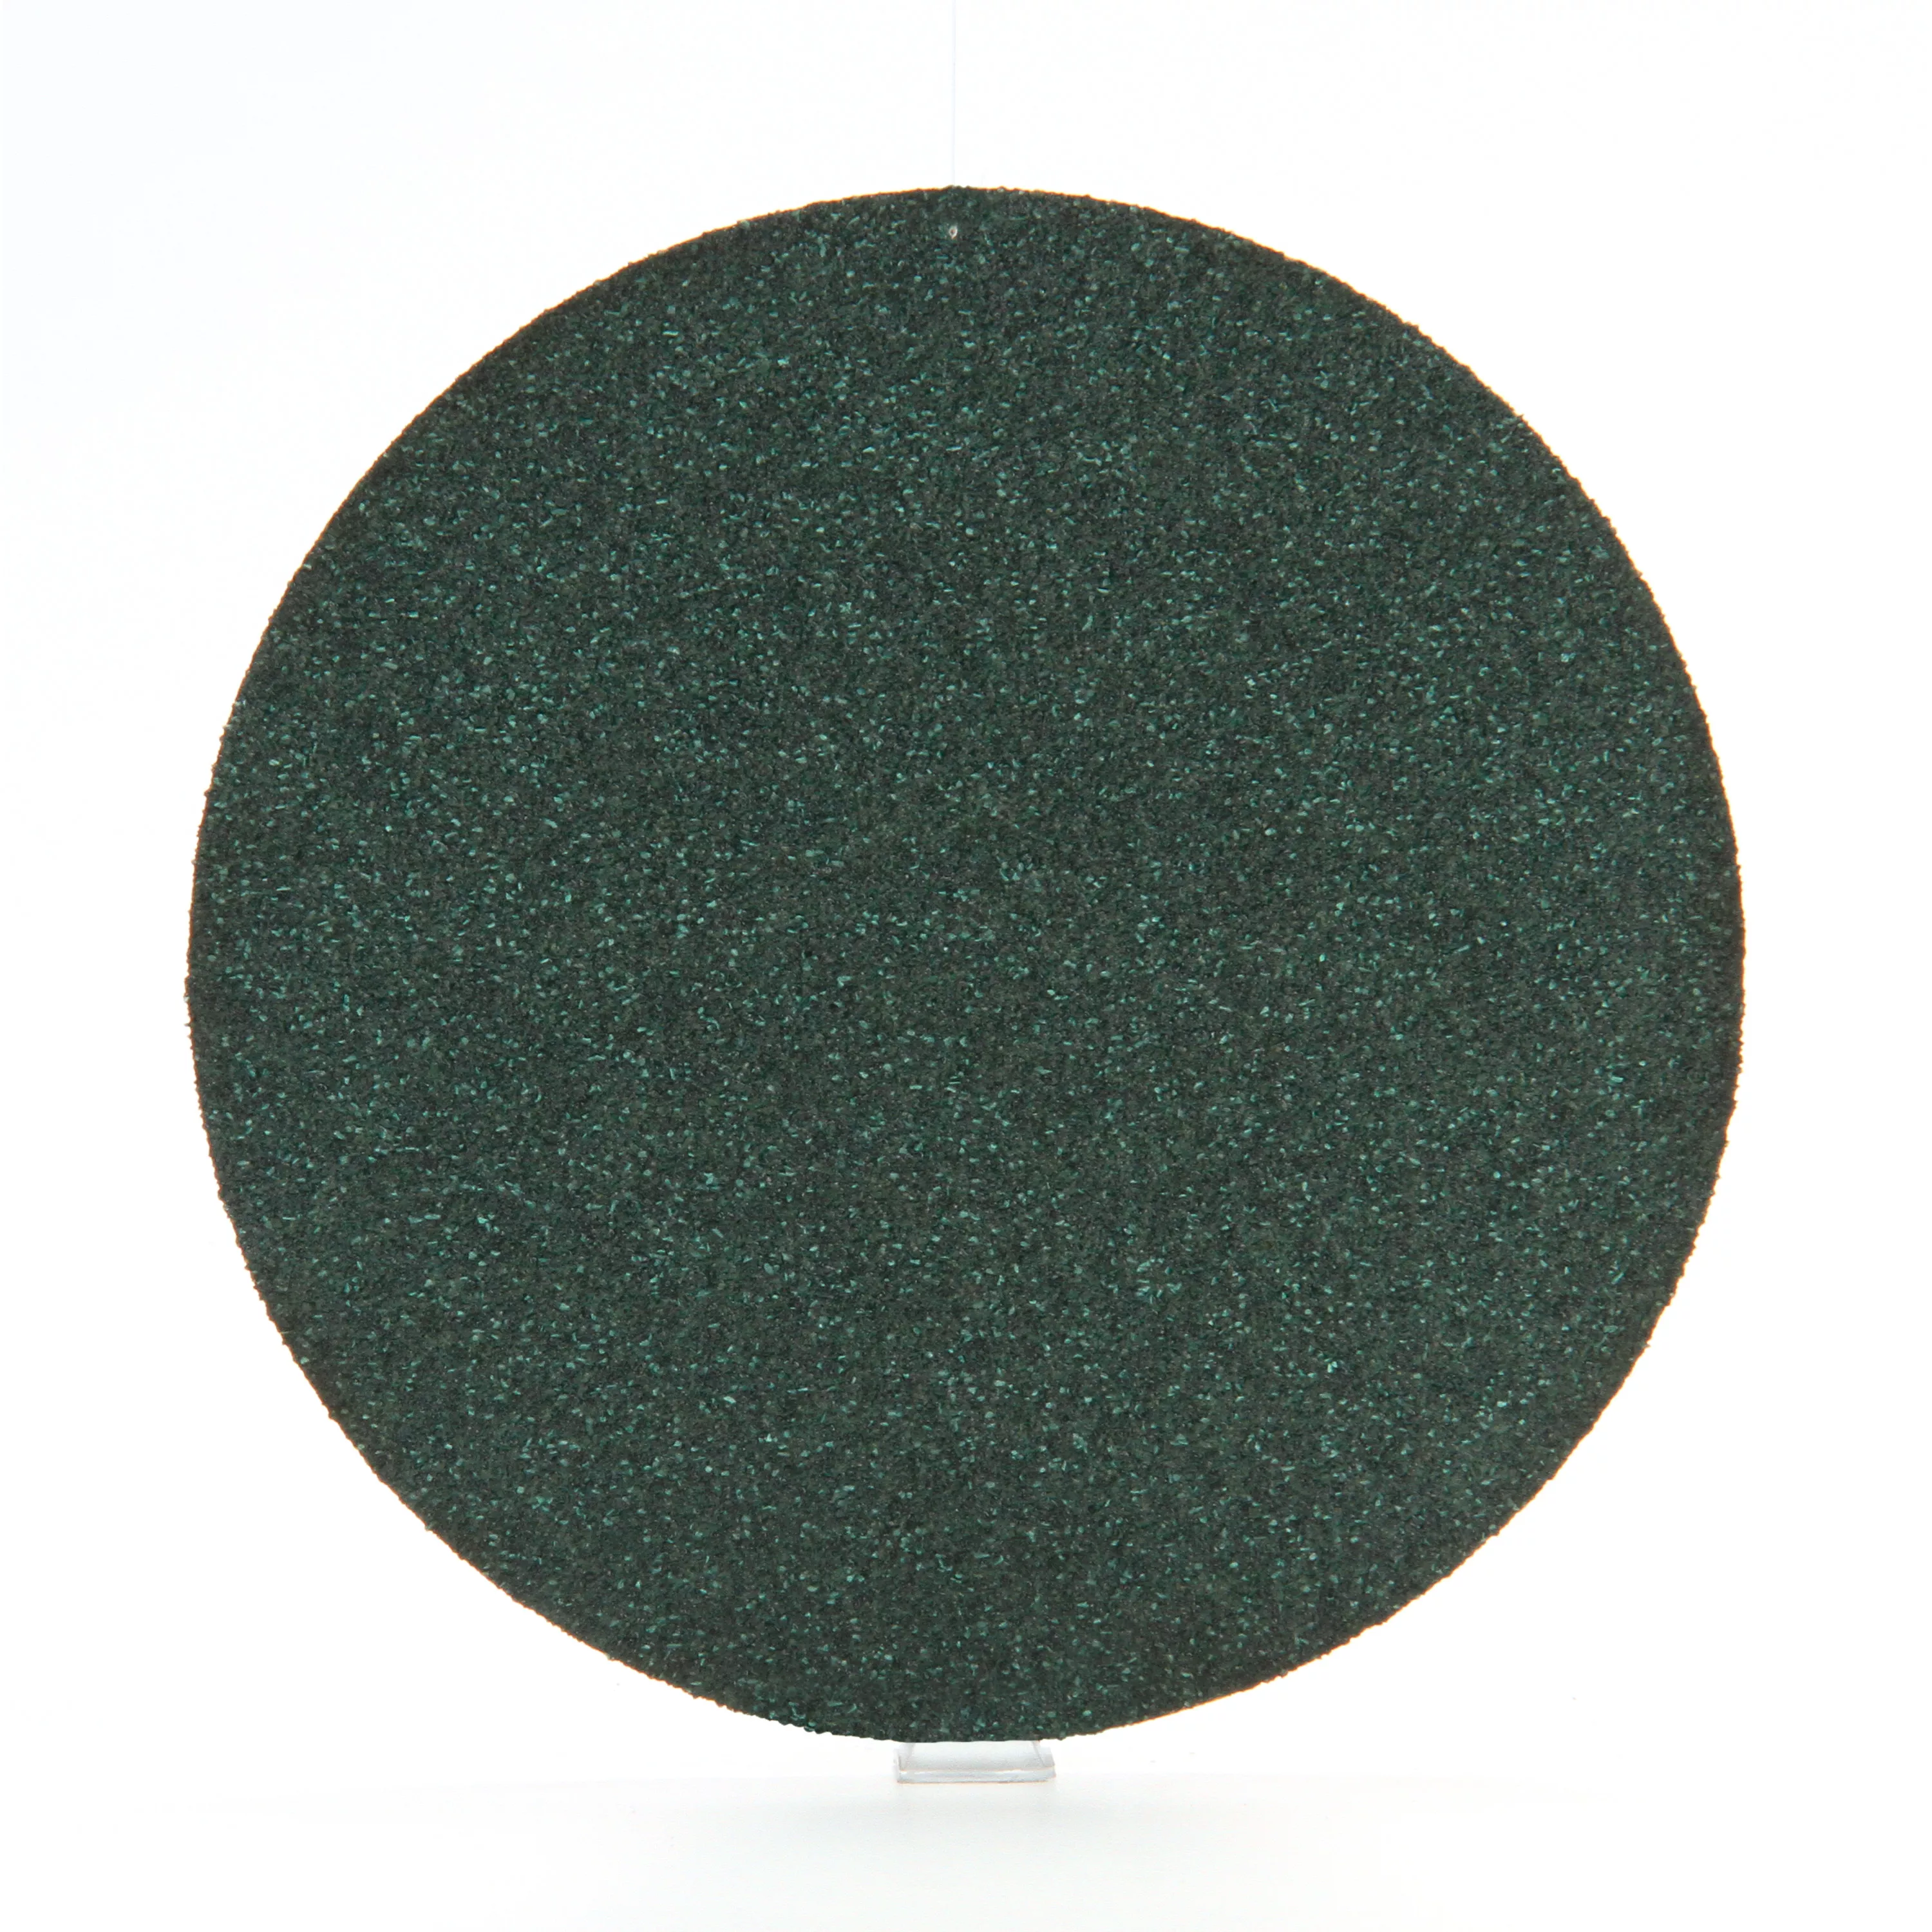 3M™ Green Corps™ Hookit™ Paper Abrasive Disc, 35435, 36 Grit, E weight,
7 in x 3/8 in, 50 discs per carton, 5 cartons per case